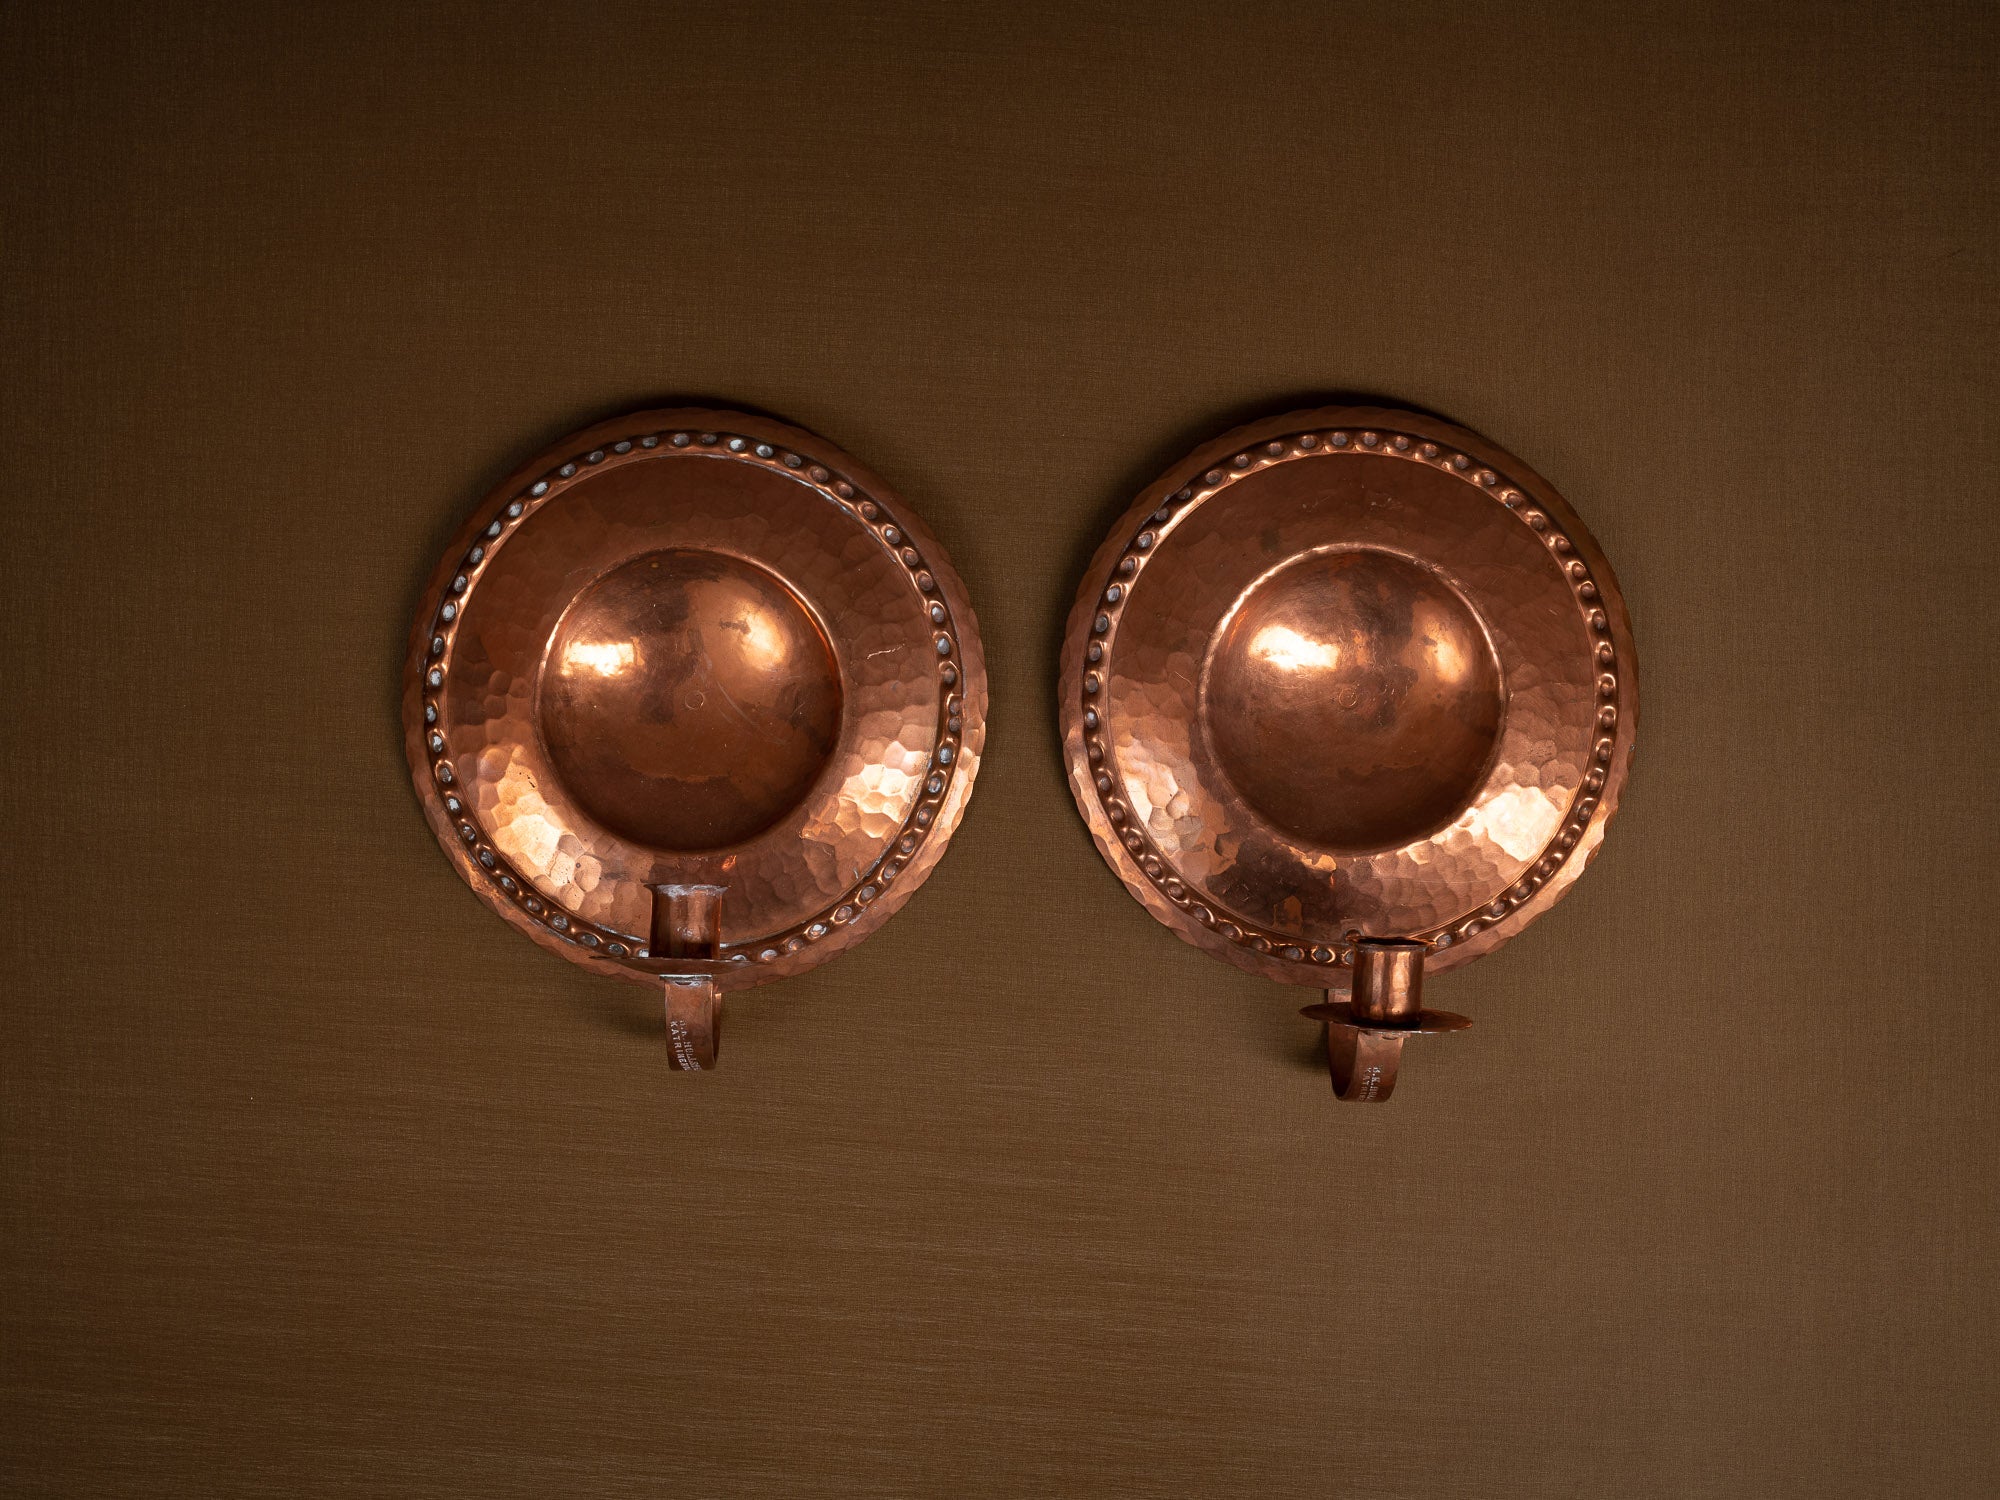 Rare paire de miroirs d'appliques en cuivre par B.K. Hollstein, Suède (vers 1900)..Set of 2 folk copper wall hanging candle holders by B.K. Hollstein, Sweden (ca. 1900)